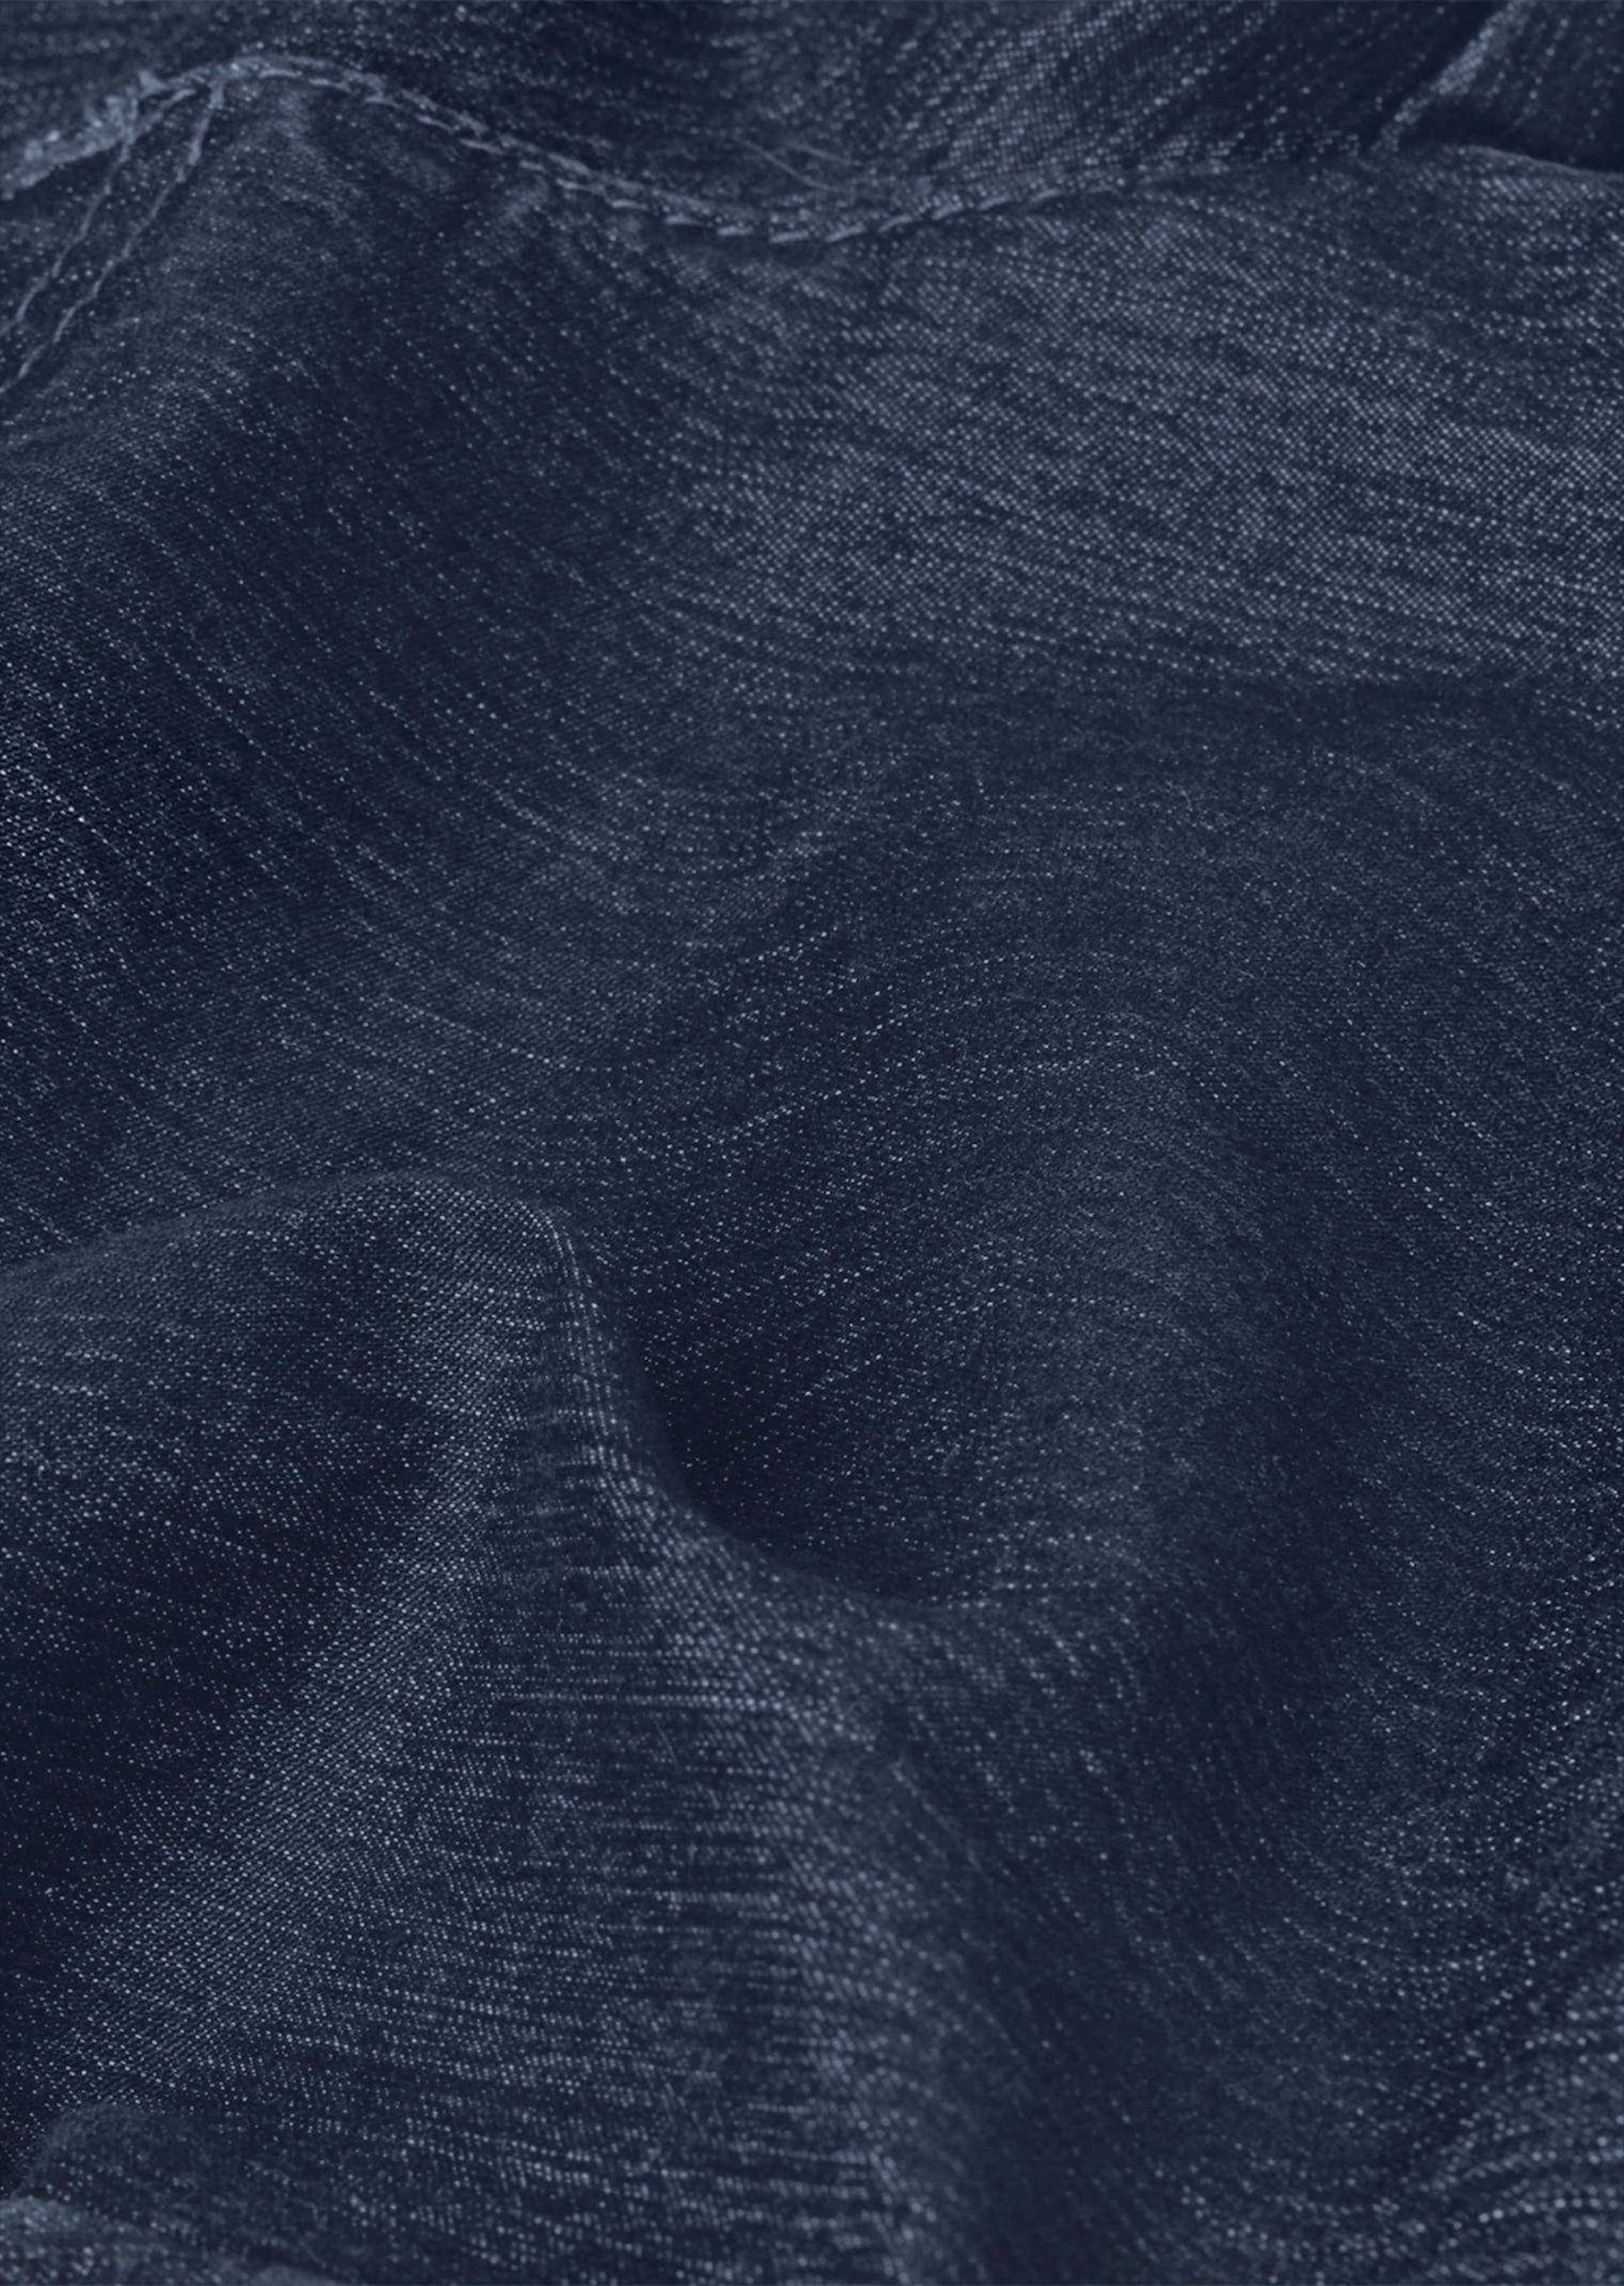 GOLDNER Bequeme Jeans Edel geschmückte Jeansschlupfhose MARTHA dunkelblau